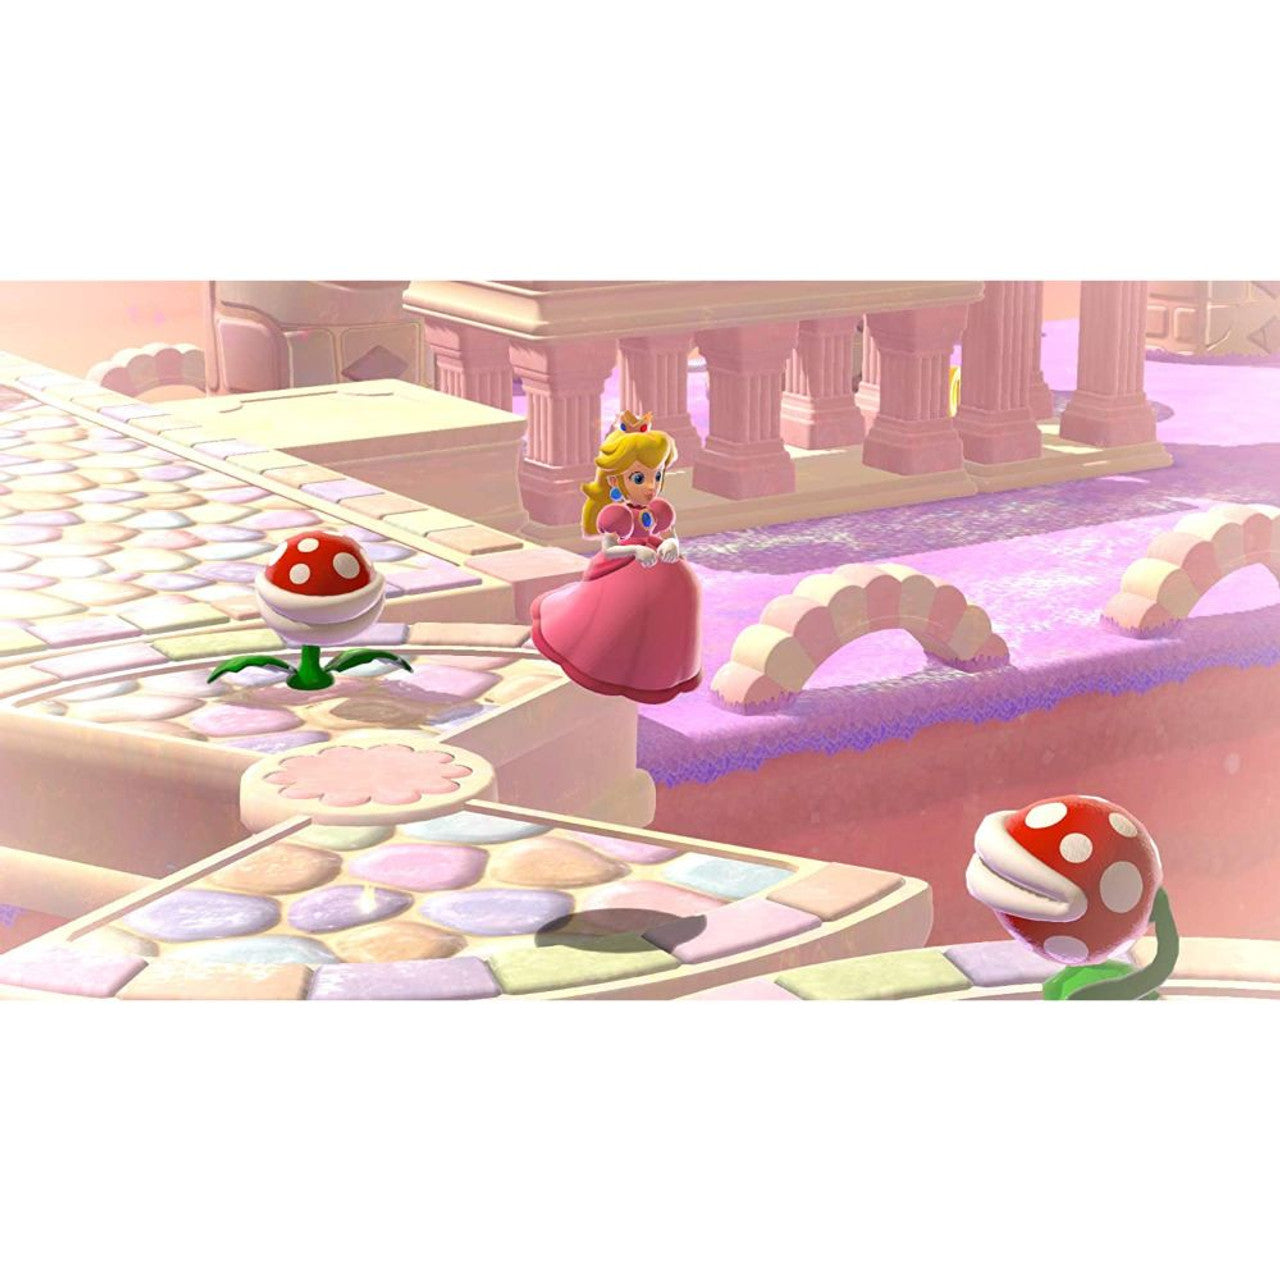 Nintendo - Super Mario 3D World + Bowser’s Fury Switch